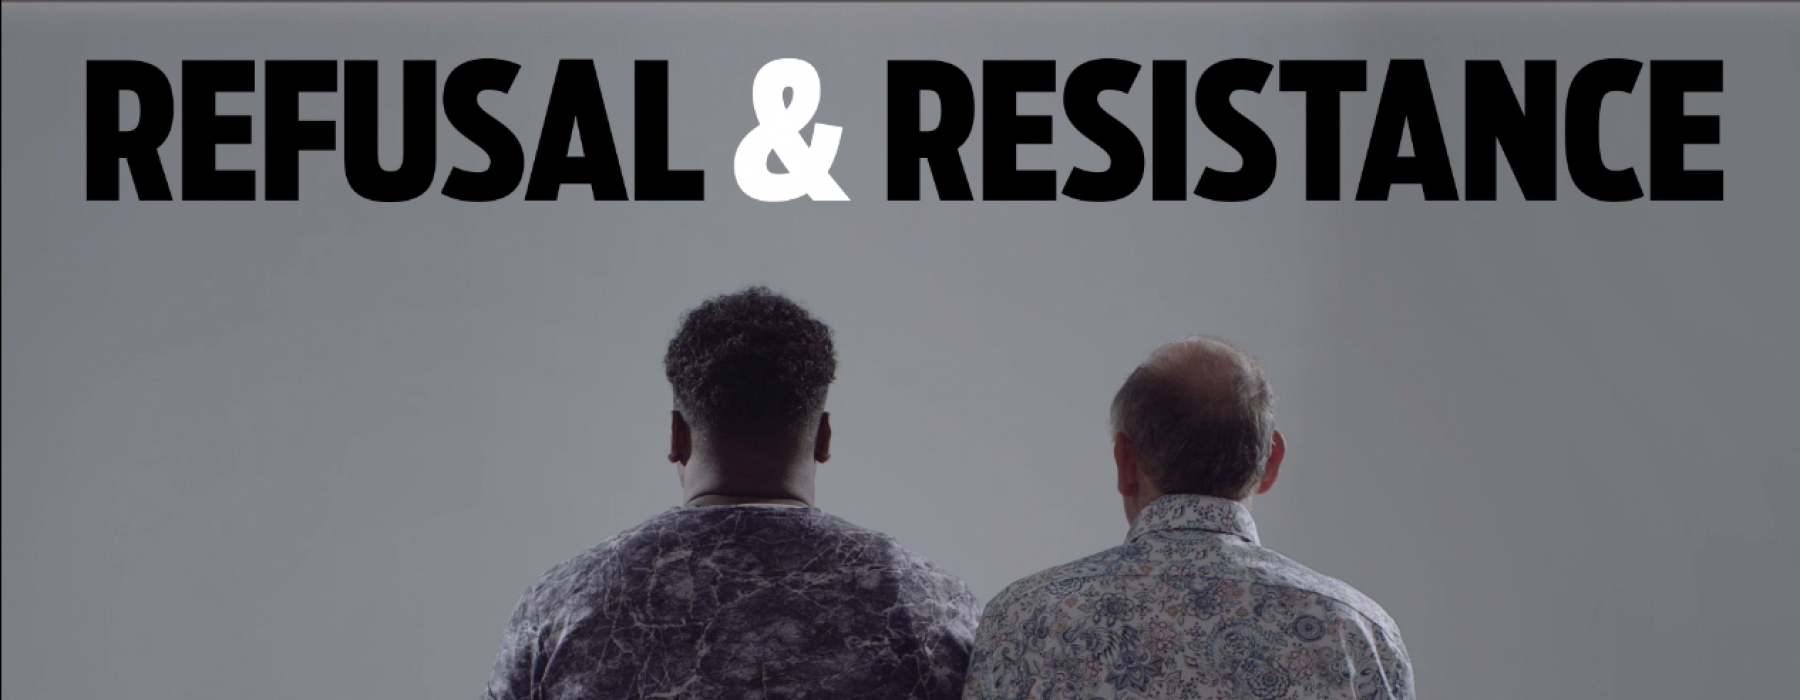 Refusal & Resistance